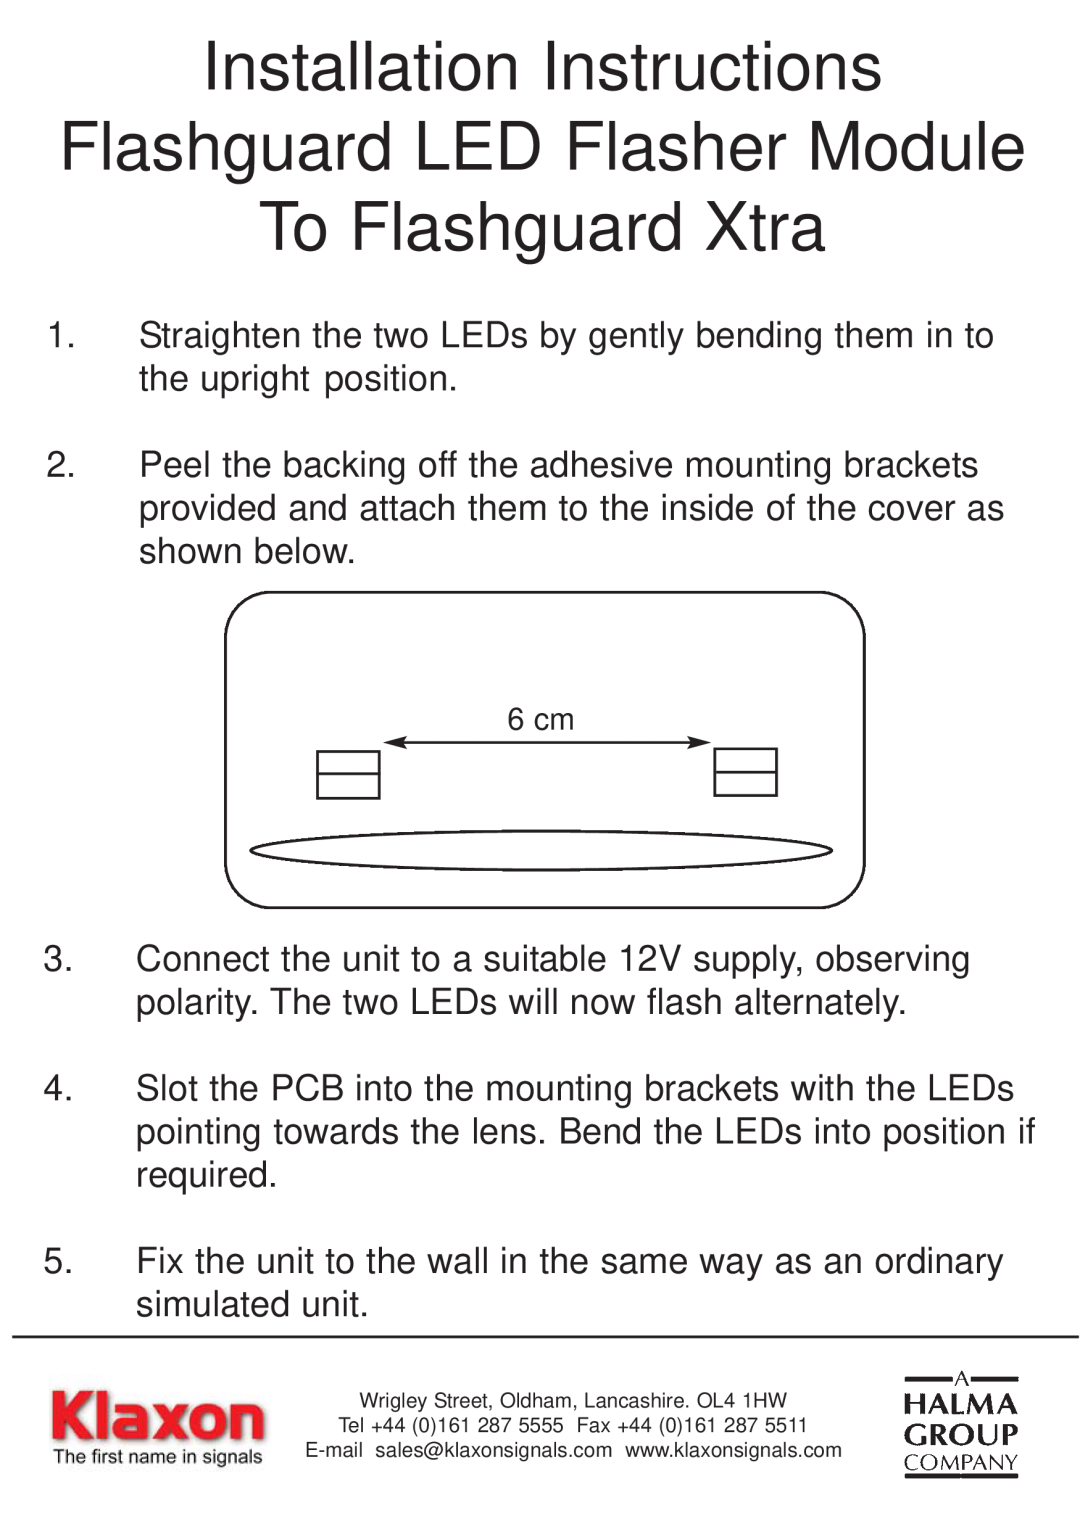 Klaxon 102325 installation instructions Installation Instructions Flashguard LED Flasher Module, To Flashguard Xtra, 6 cm 